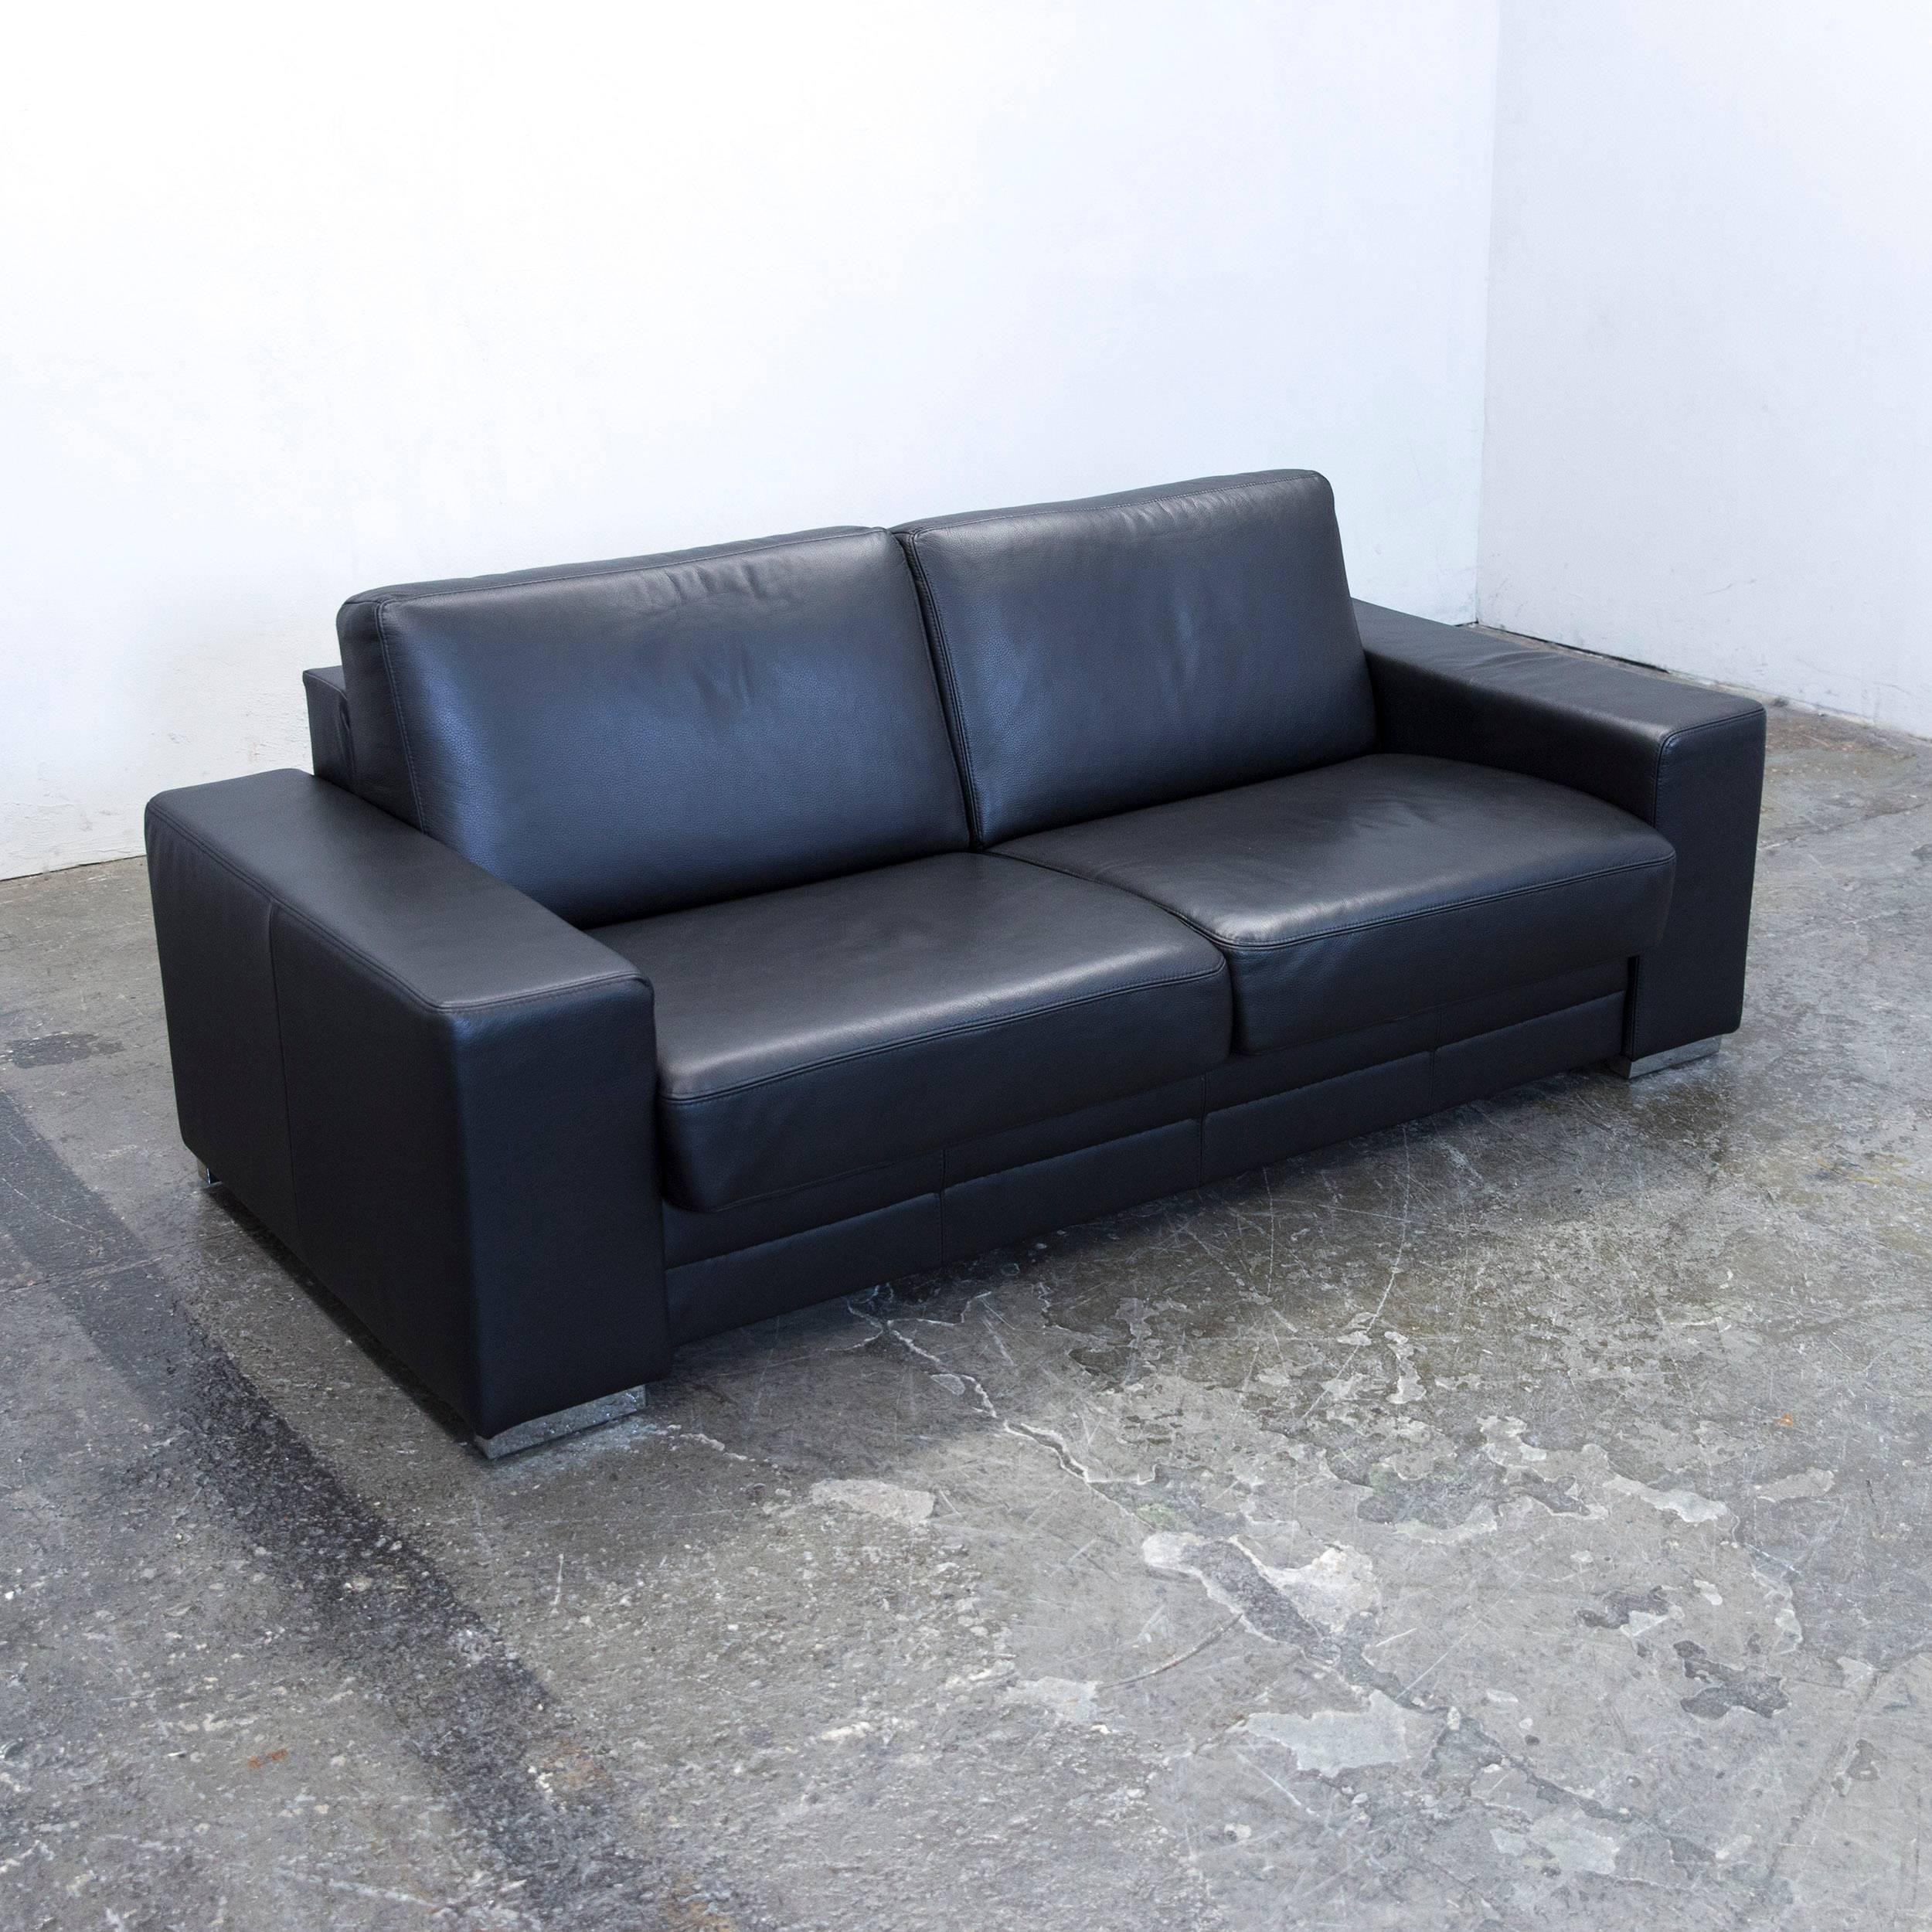 German Designer Sleepsofa Set Leather Black Function Couch Topper Modern Footstool